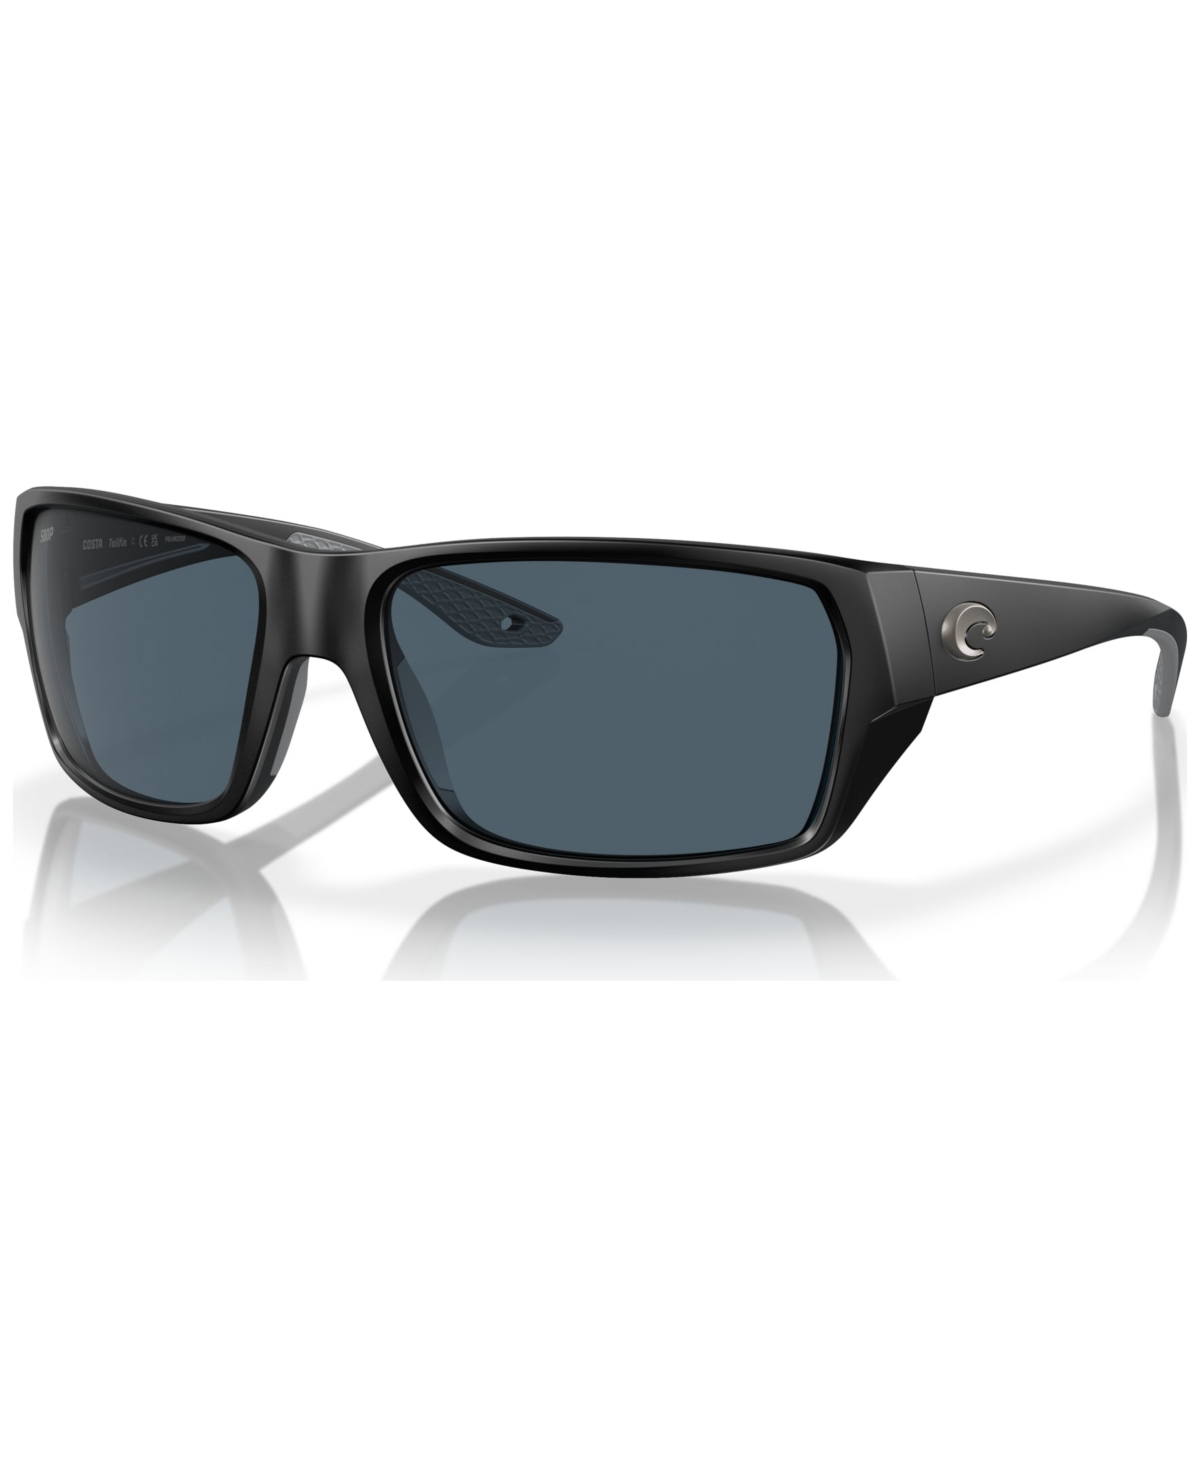 Men's Tailfin Polarized Sunglasses, 6S9113 - Matte Black